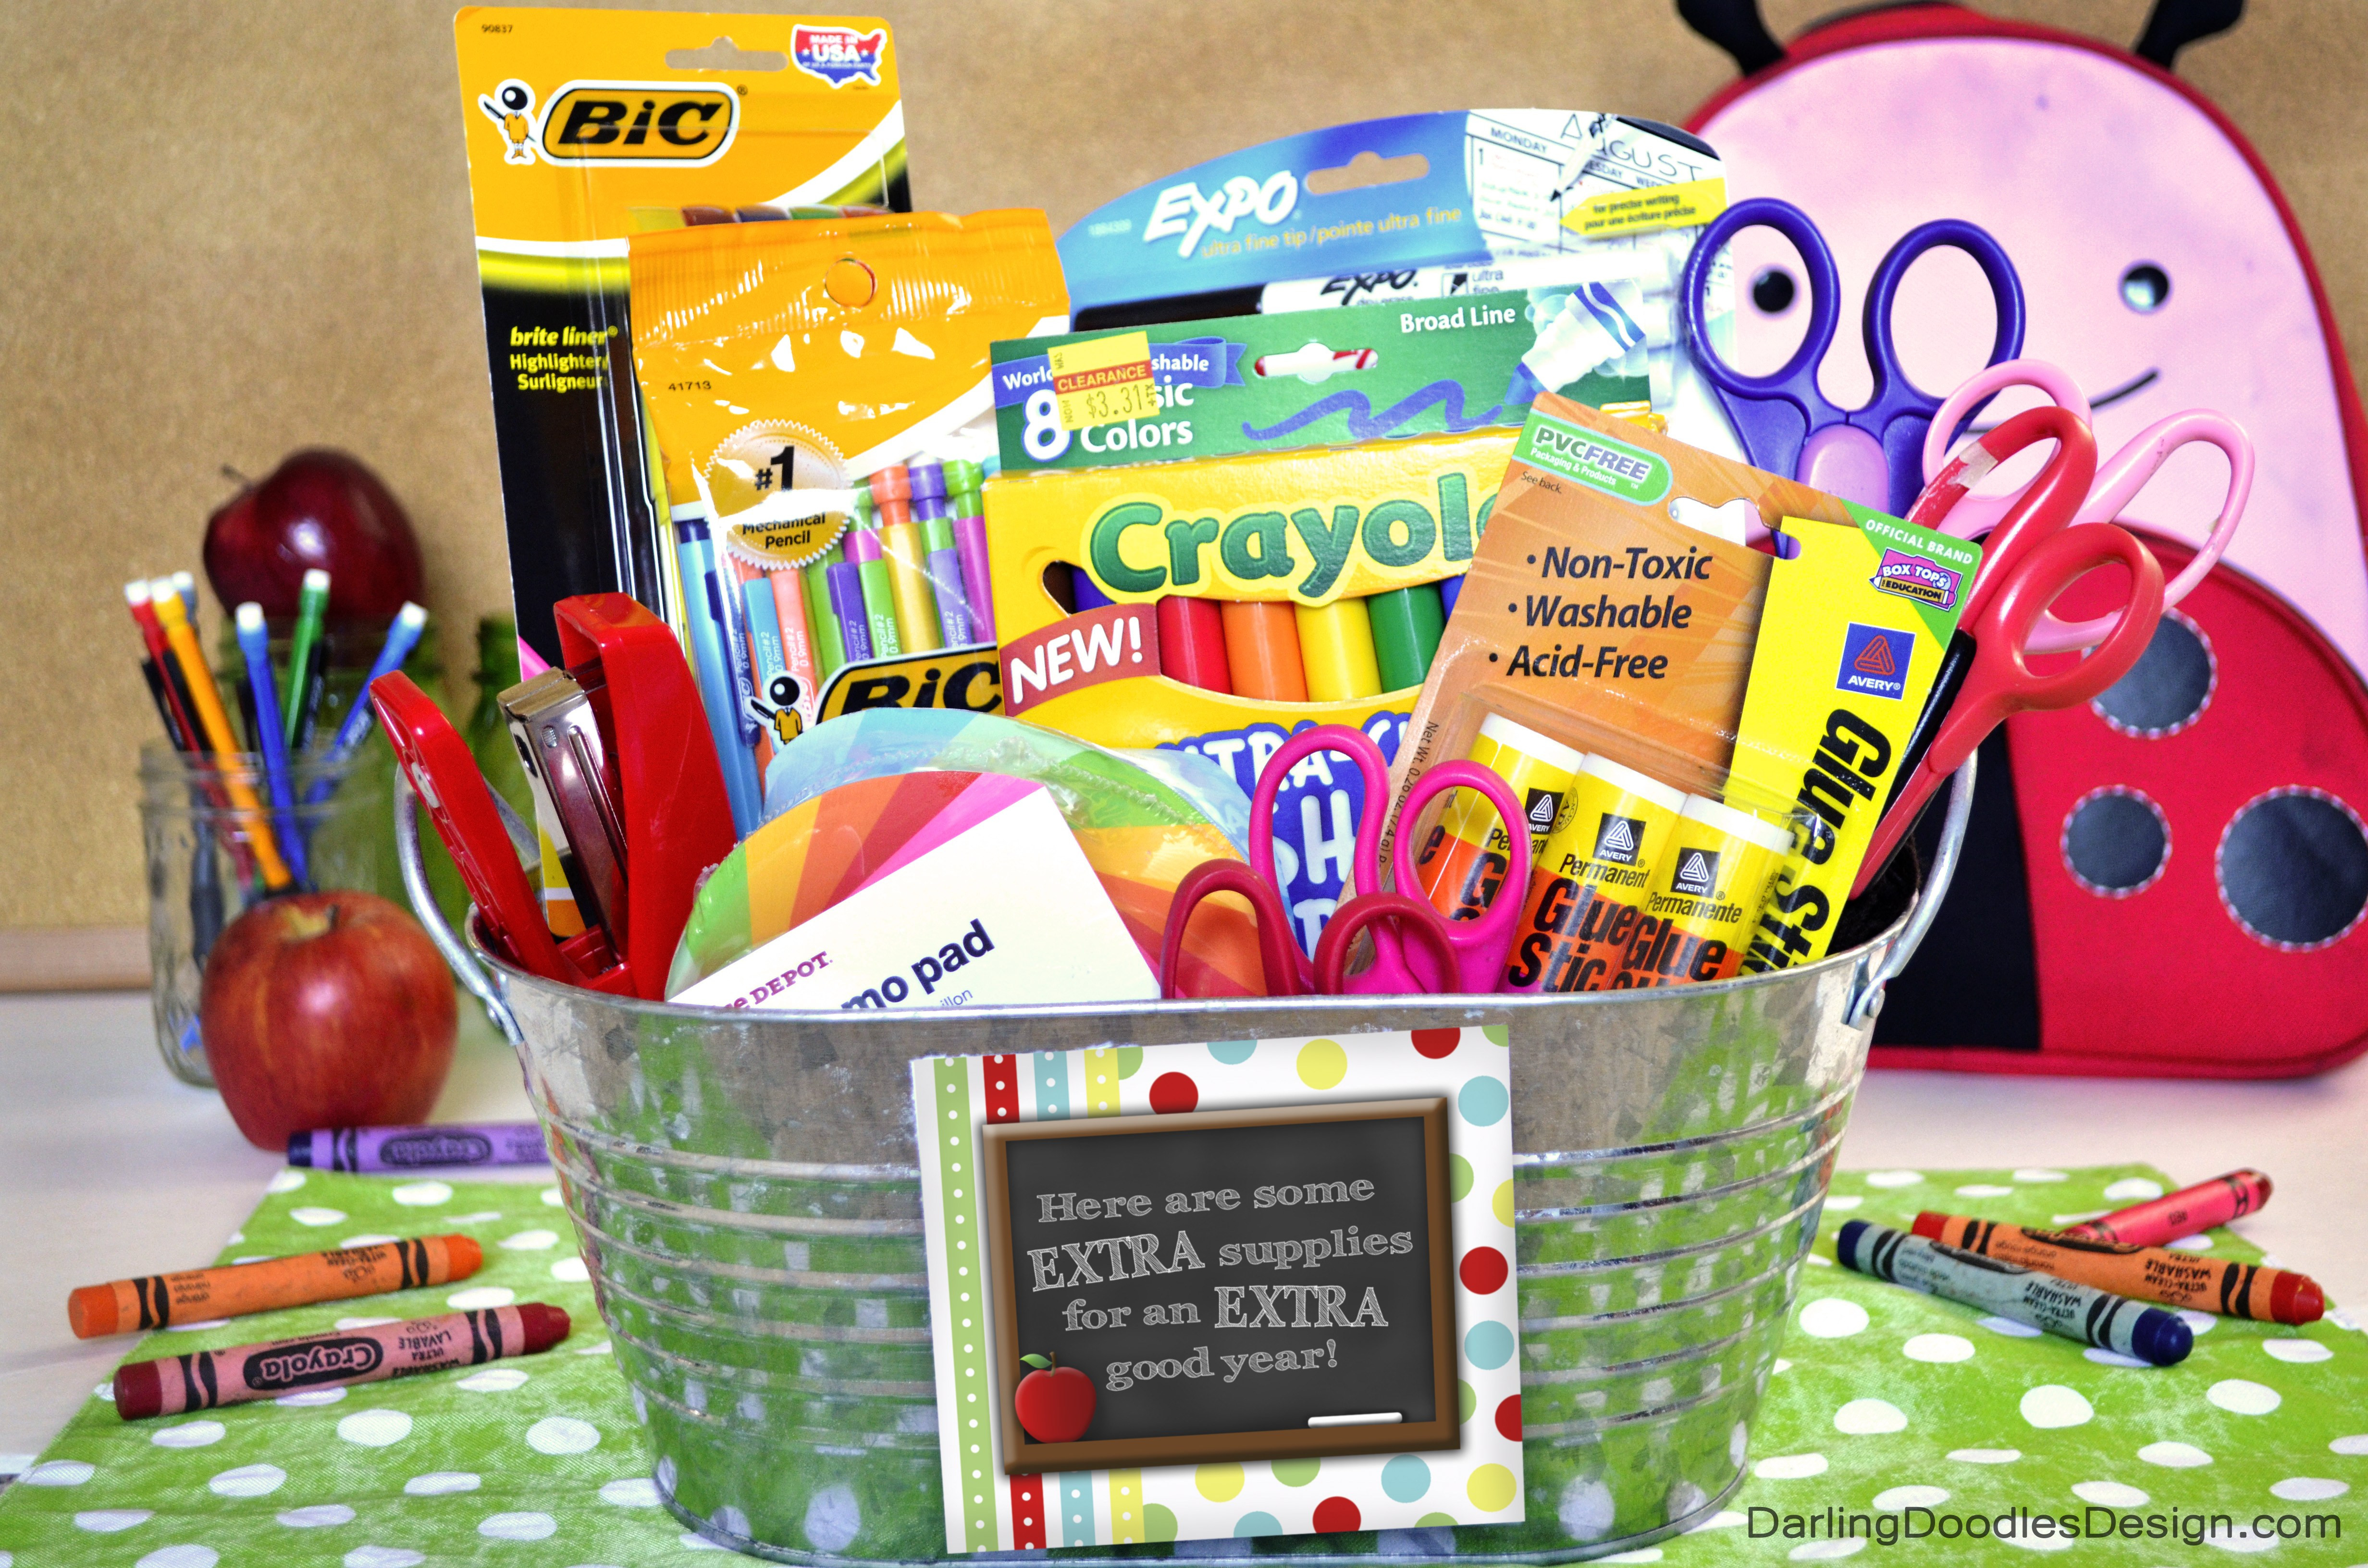 Teacher Gift Baskets Ideas
 "Extra" Fun Back to School Gift Idea Darling Doodles